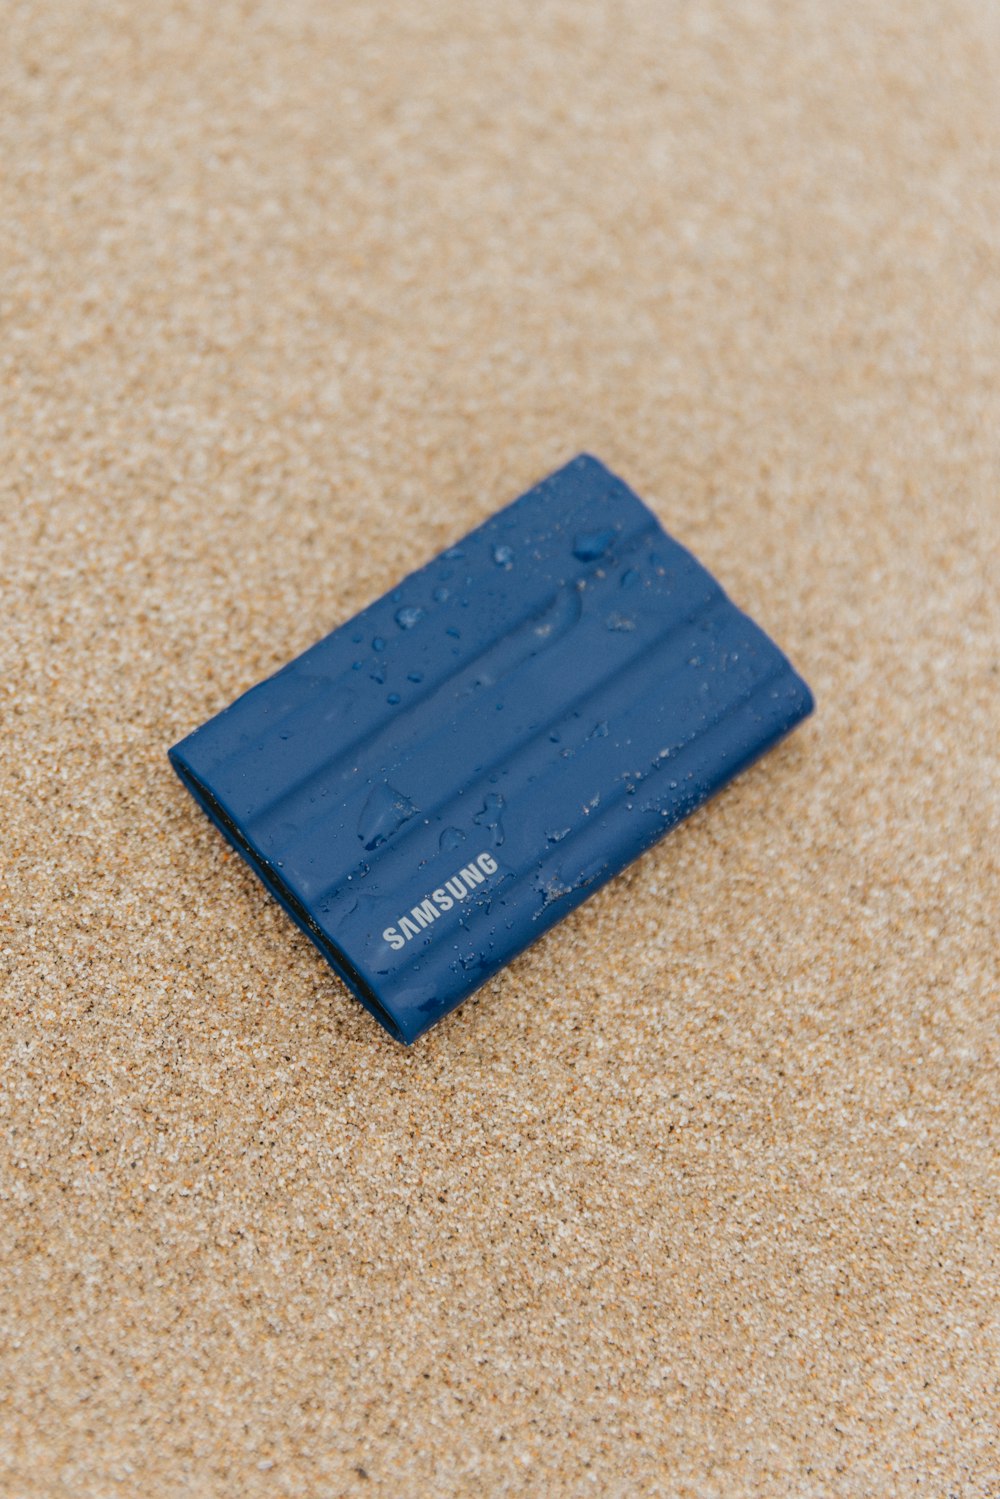 a blue rectangular object on a tan surface